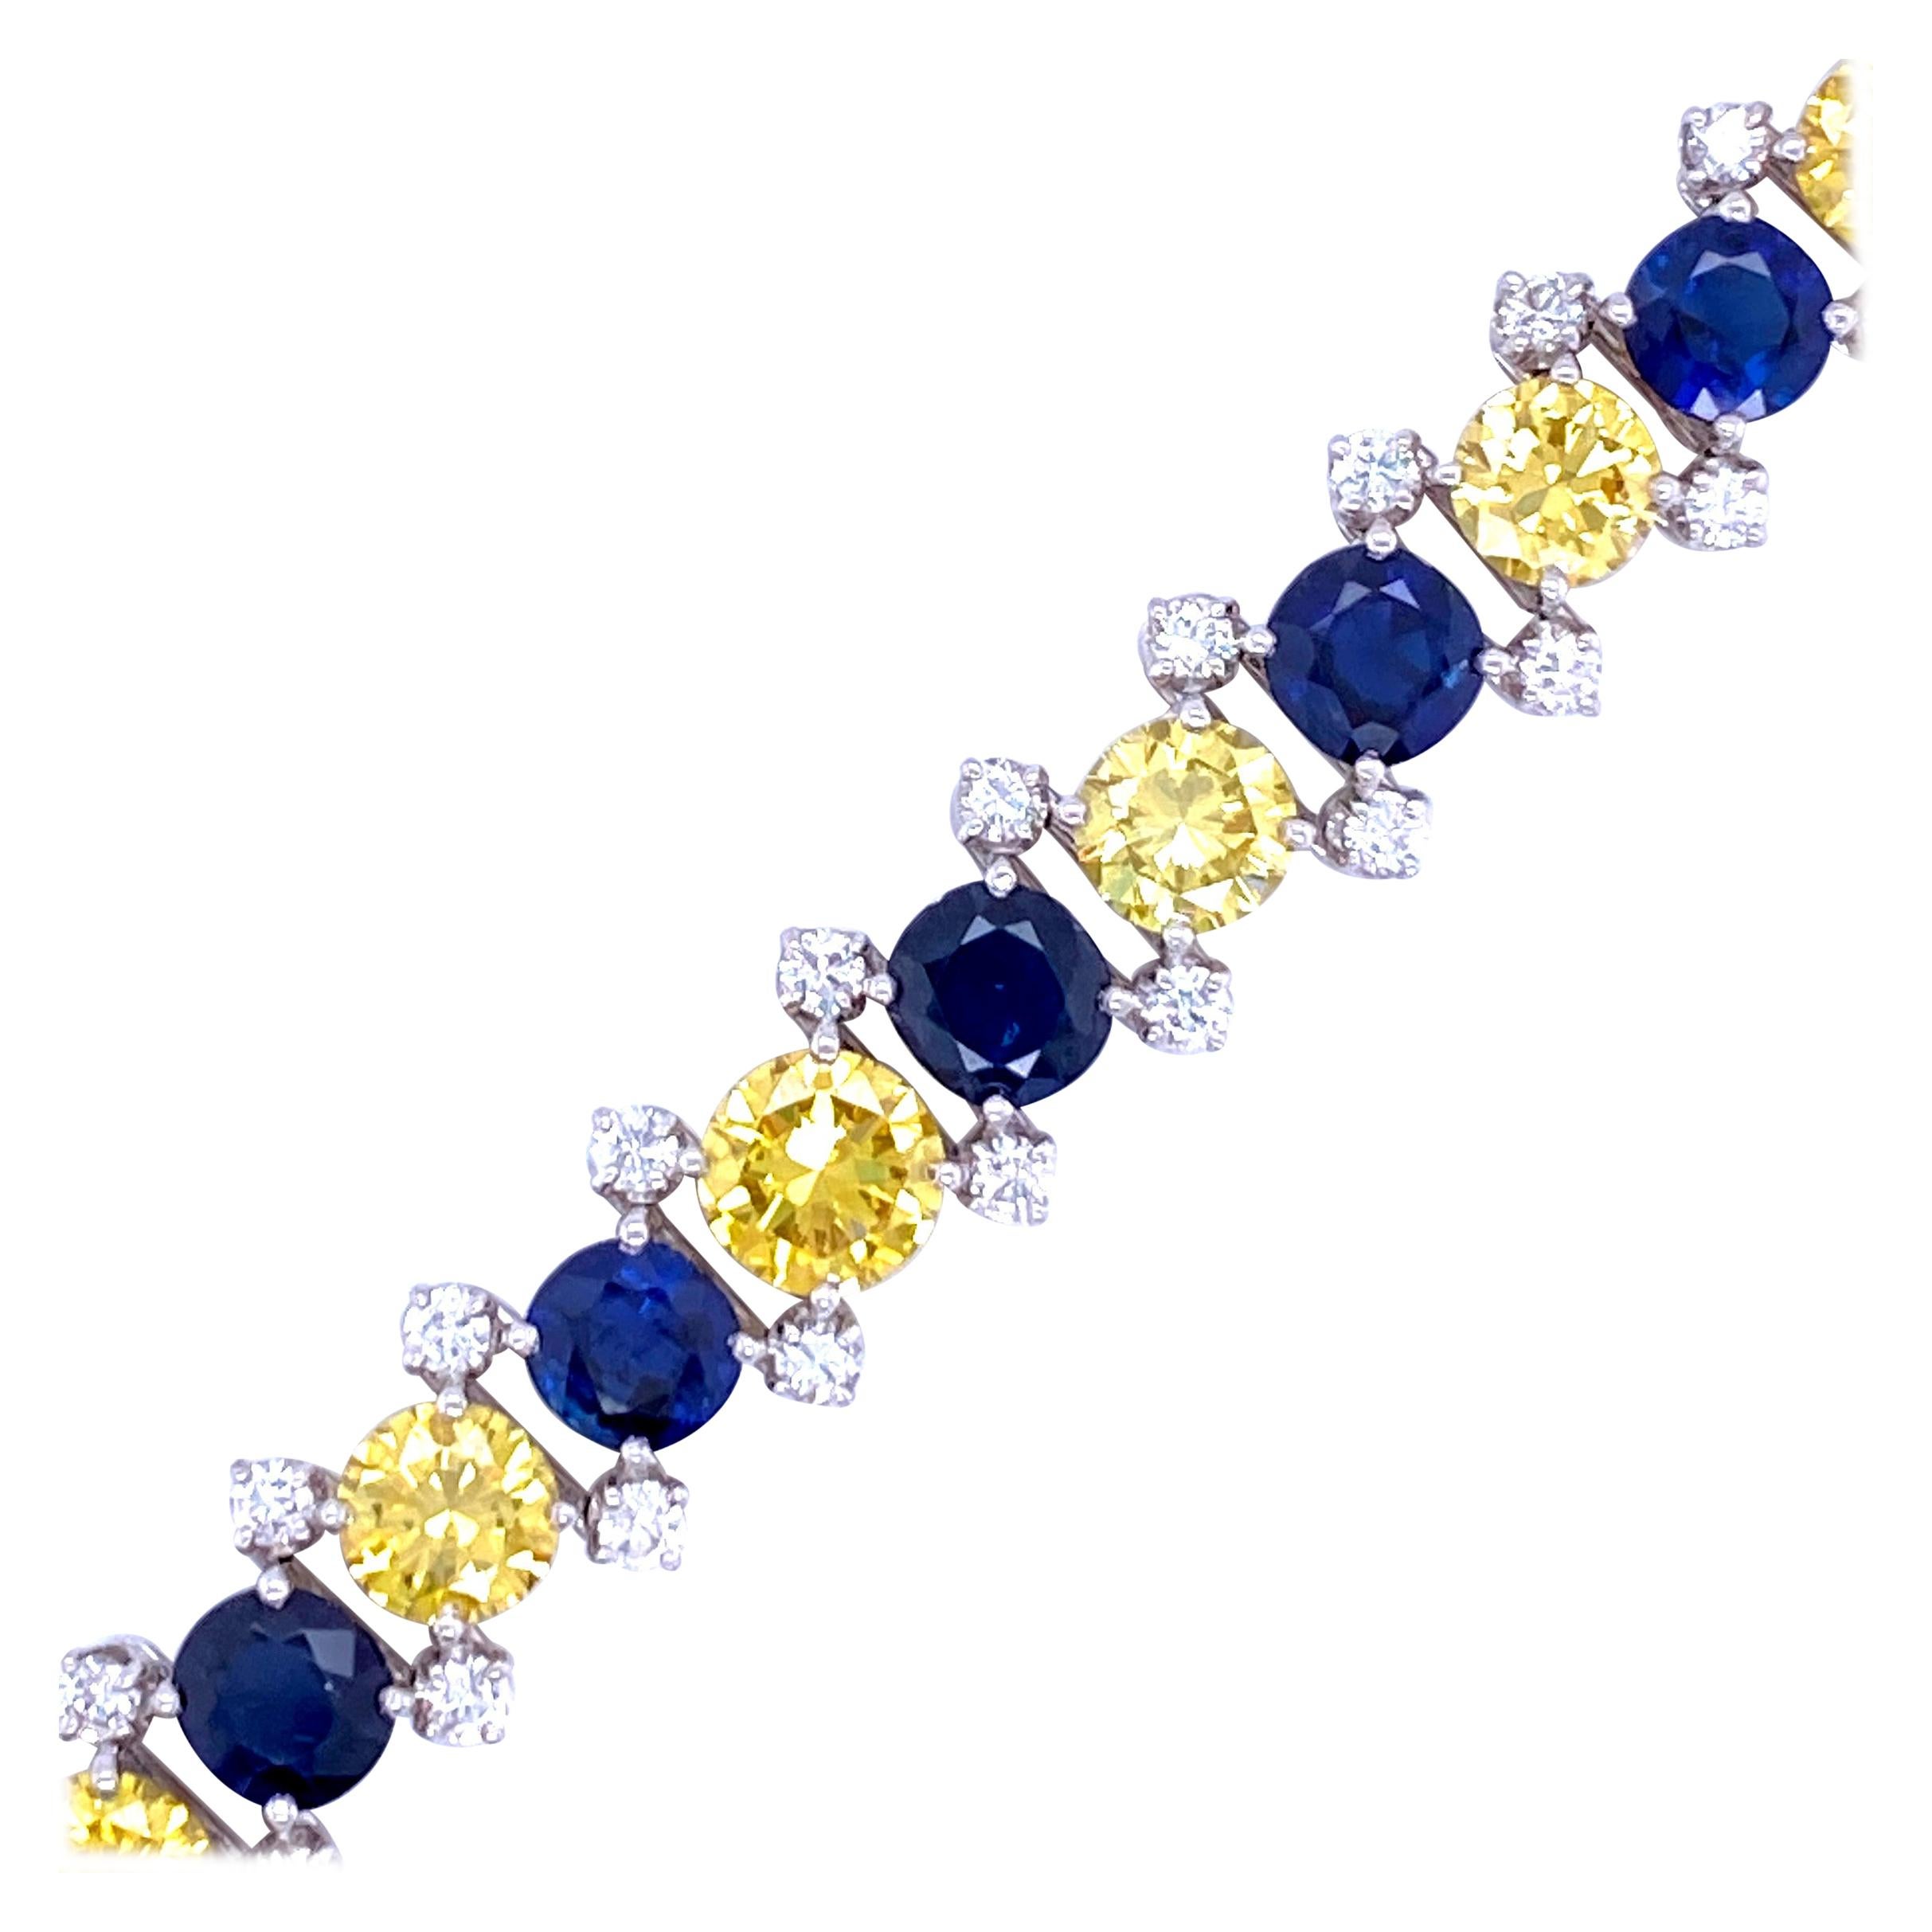 Burma Sapphire and Yellow Diamond Bracelet